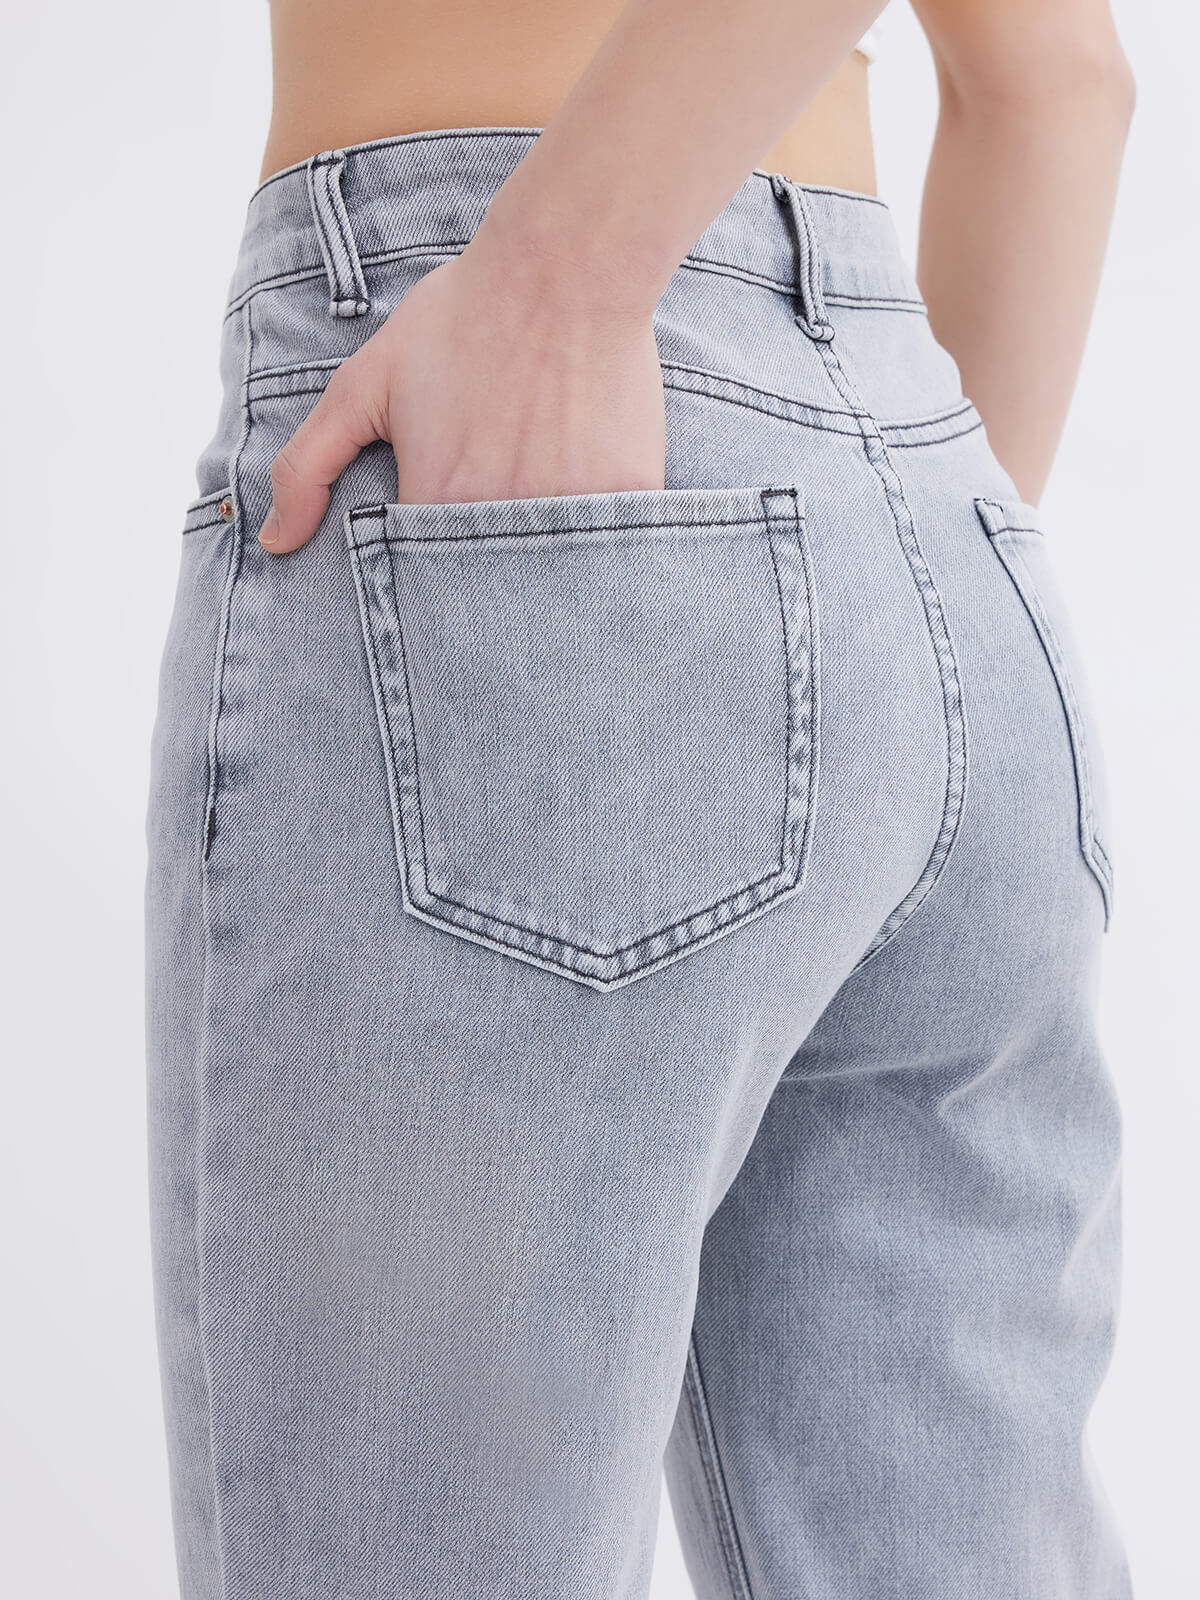 Ash Grey Jeans